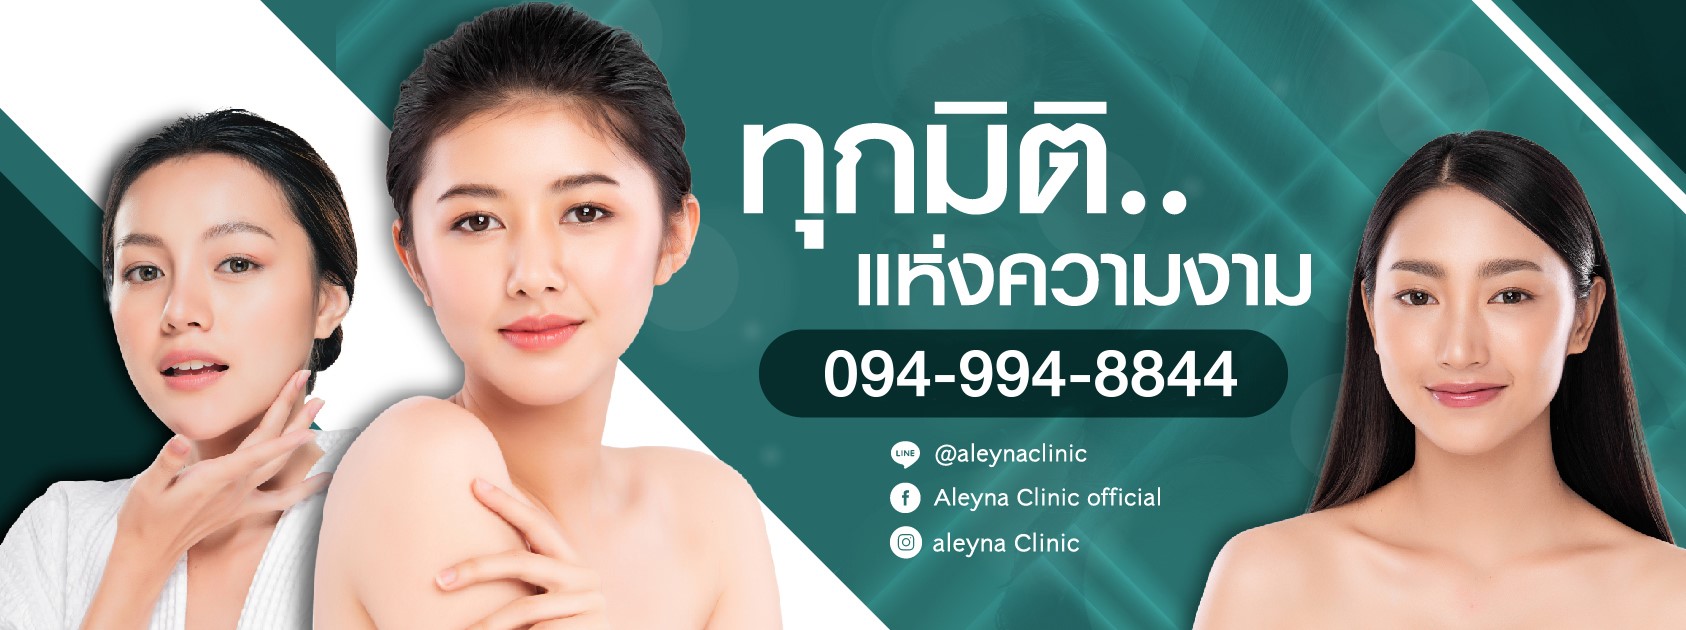 Aleyna Clinic